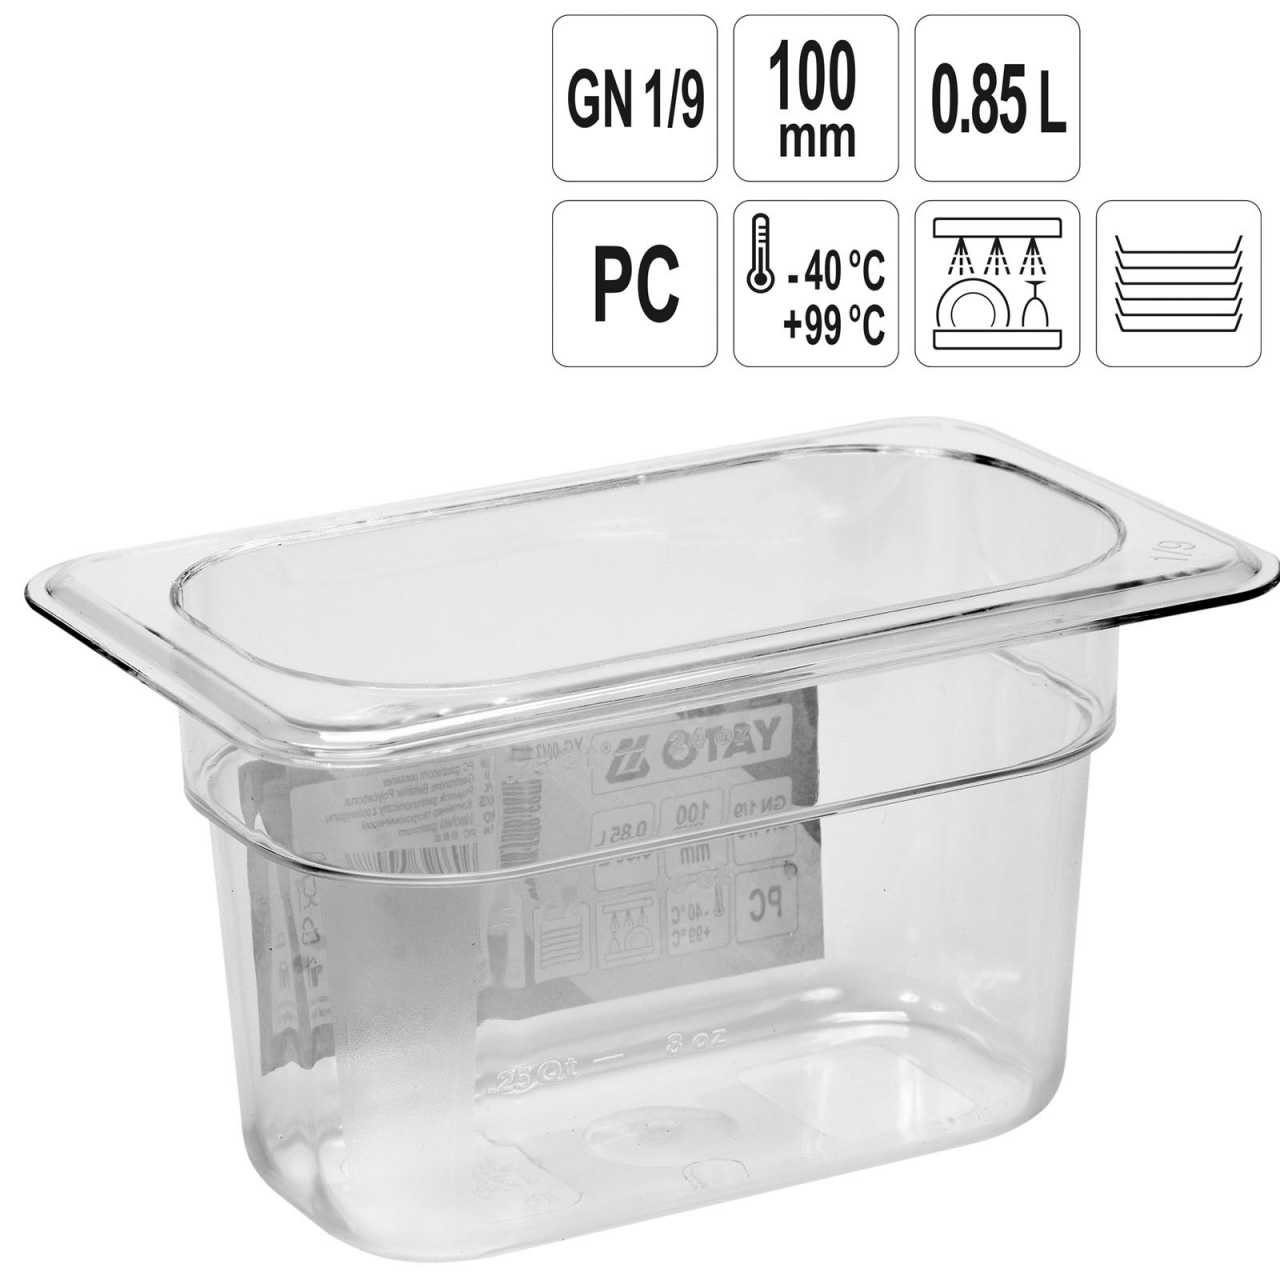 YATO Profi GN Gastronorm Behälter Kunststoff 1/9 100mm YG-00431